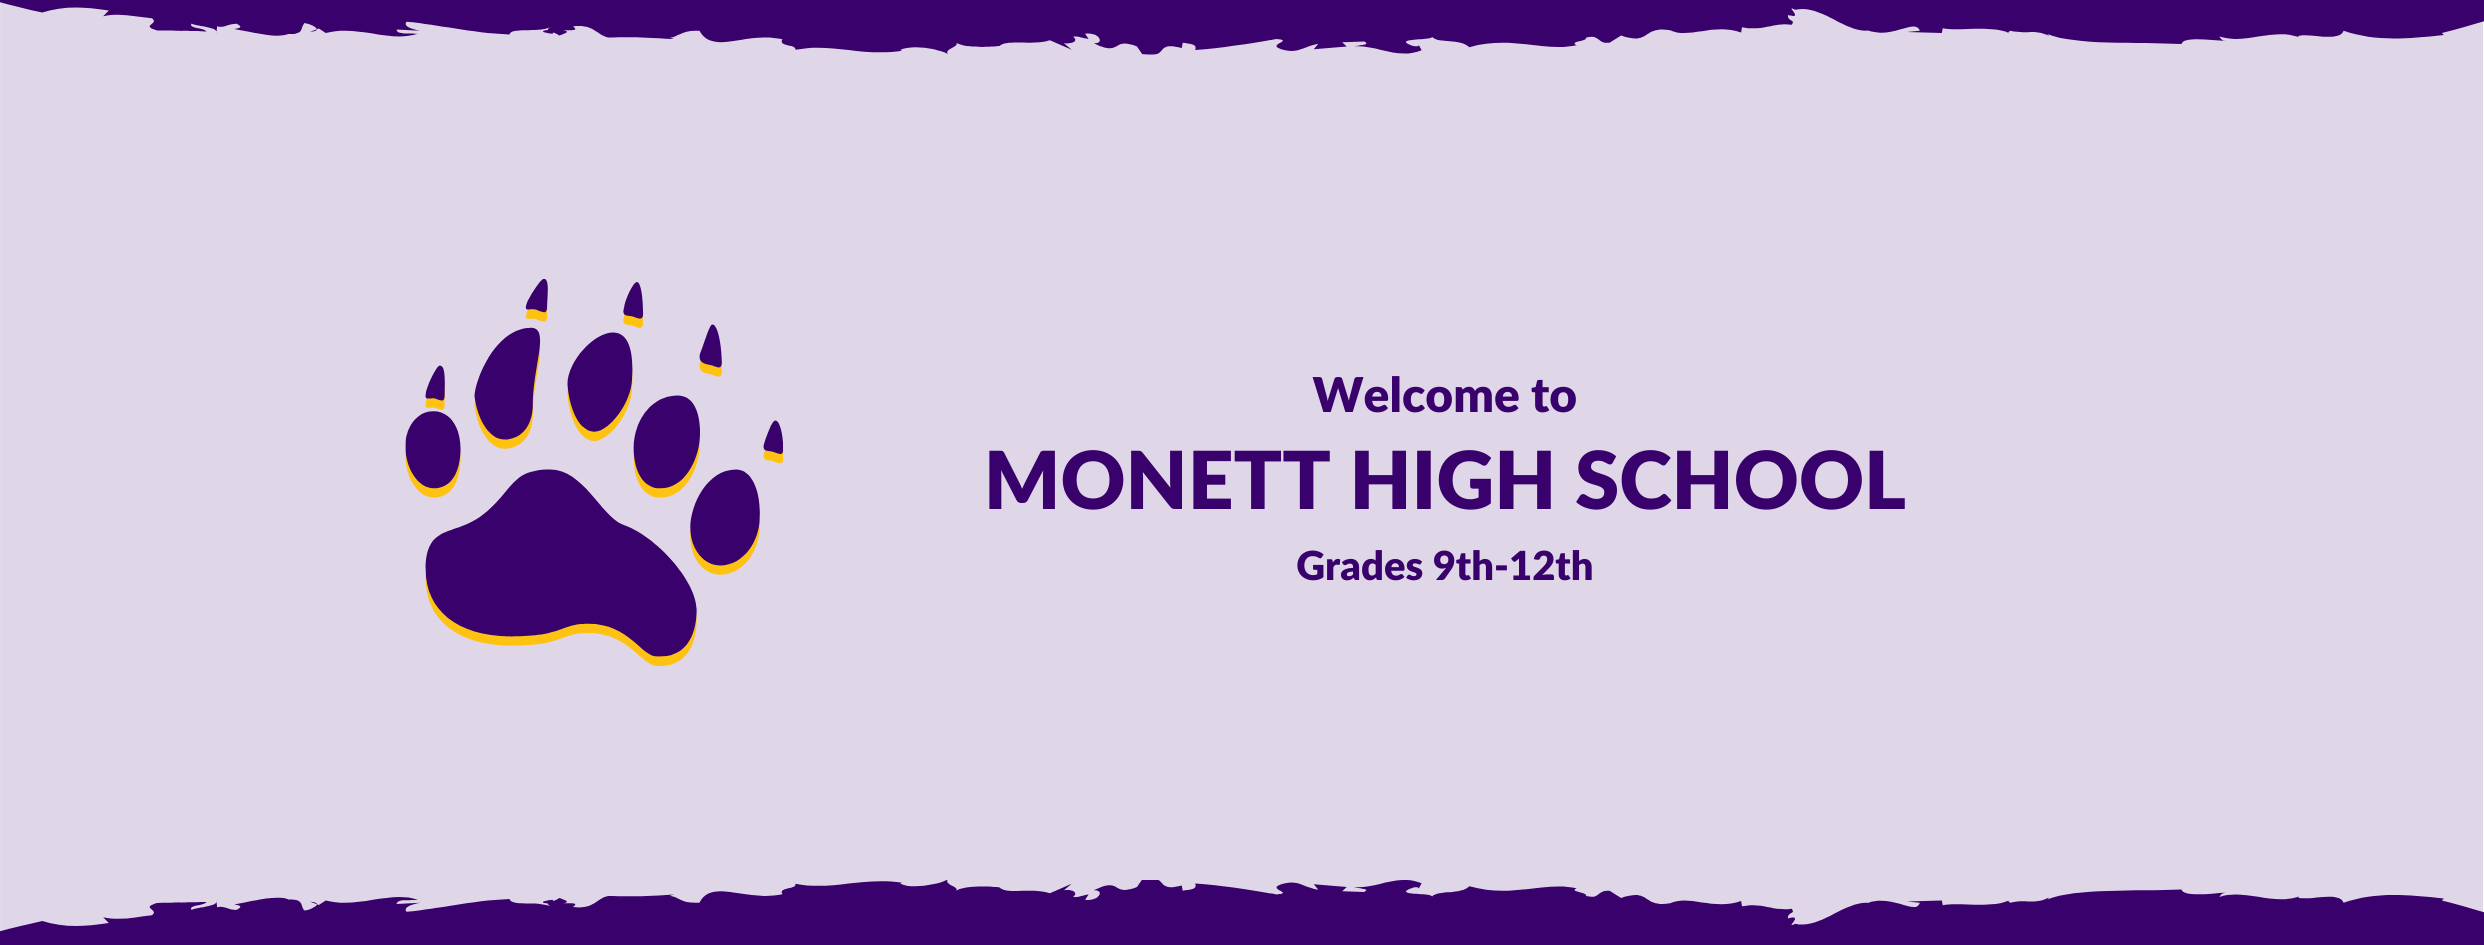 monett-high-school-student-focused-future-driven